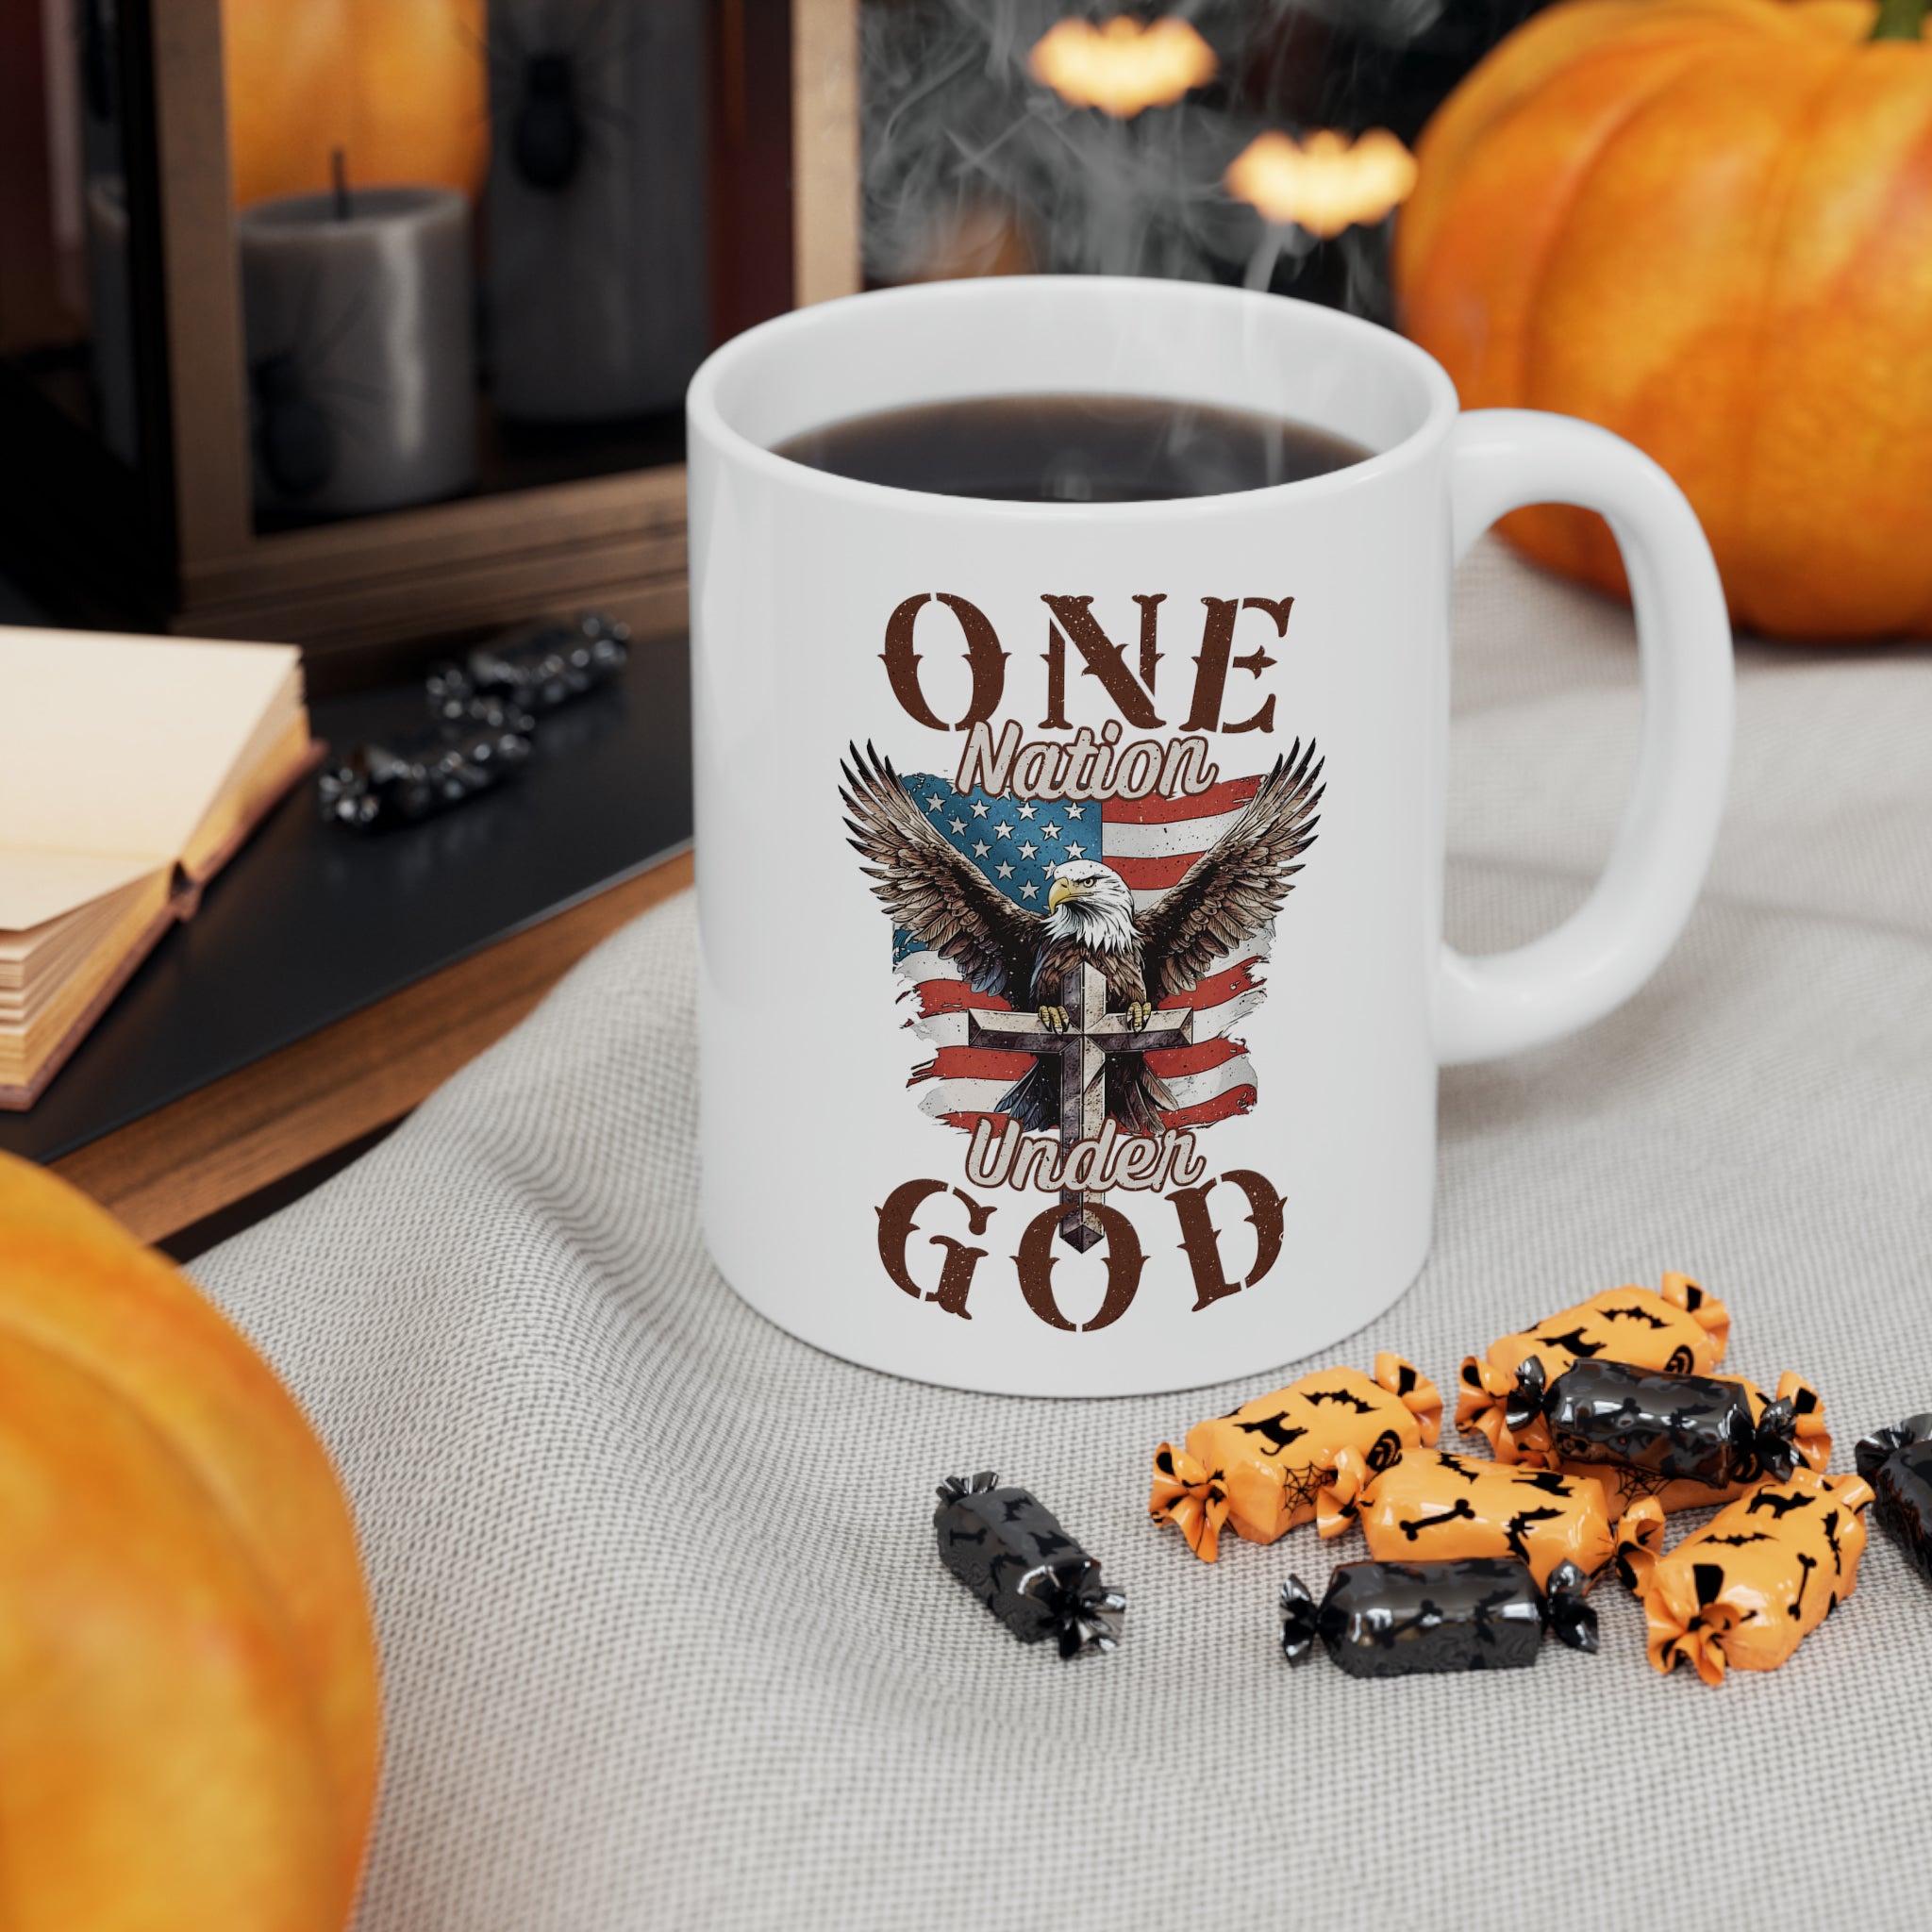 American Flag Eagle Ceramic Mug - 'One Nation Under God' - BPA & Lead Free